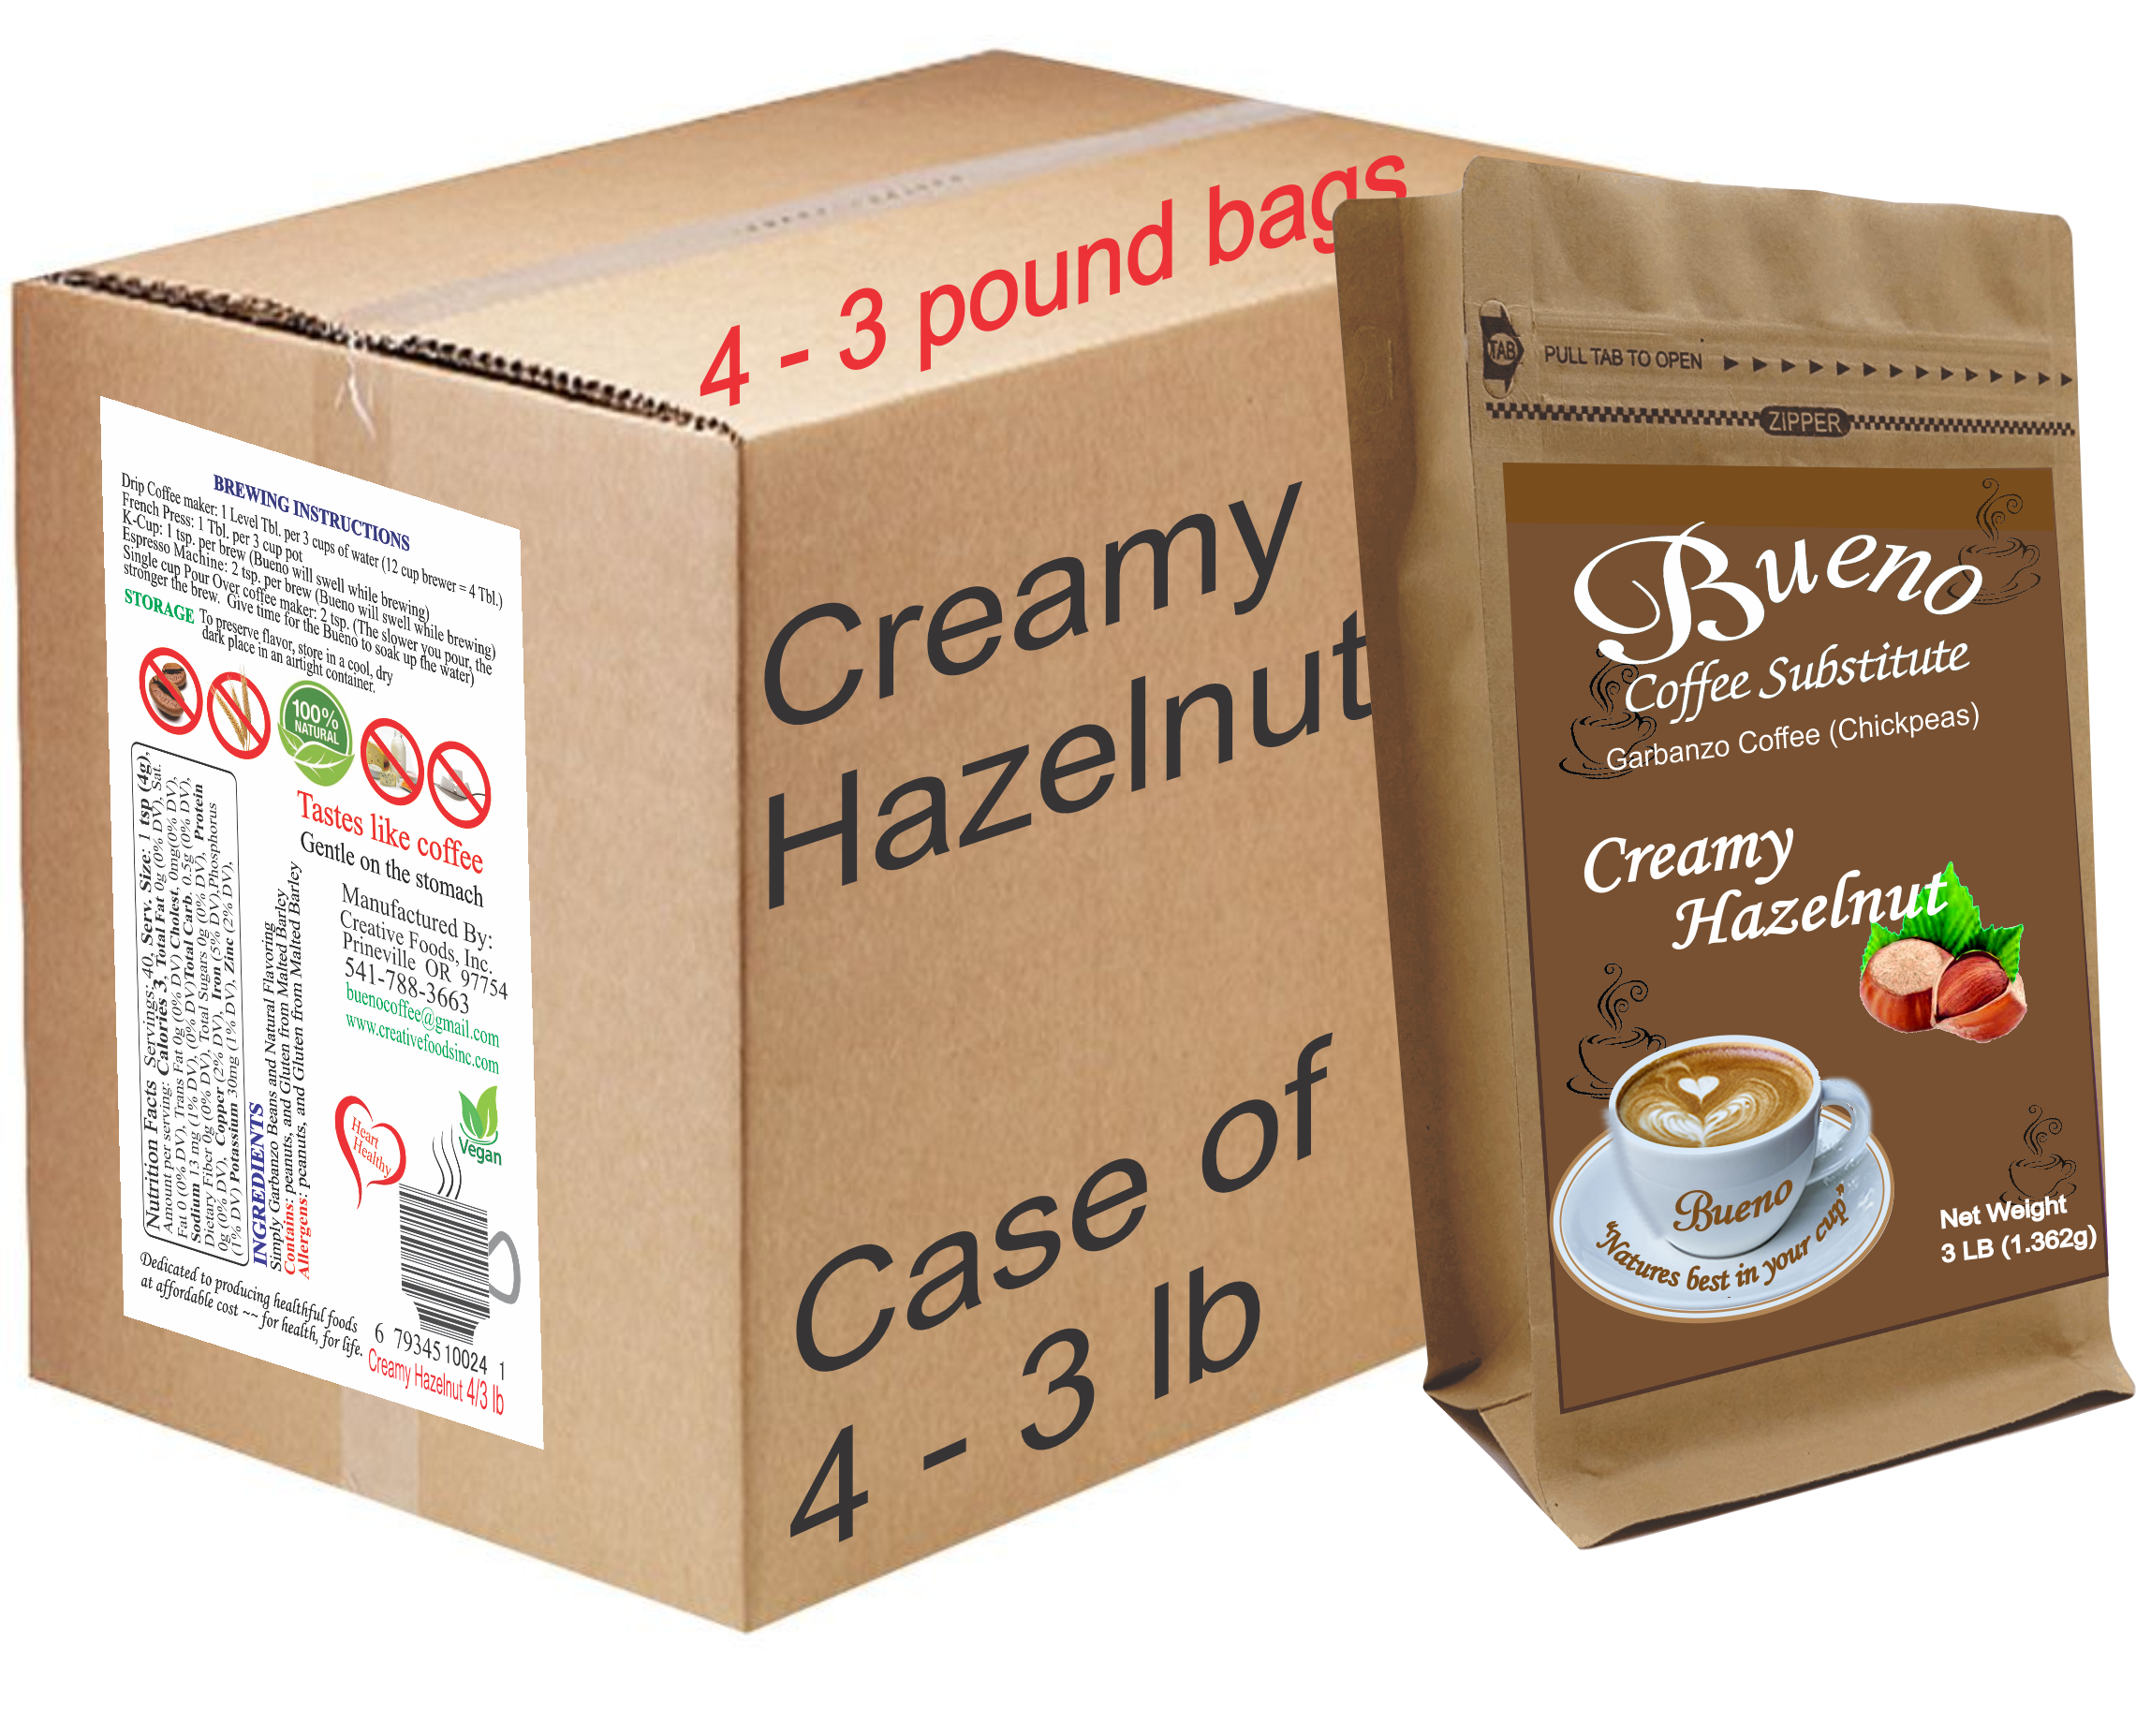 Creamy Hazelnut - case of 4 - 3 pound packages